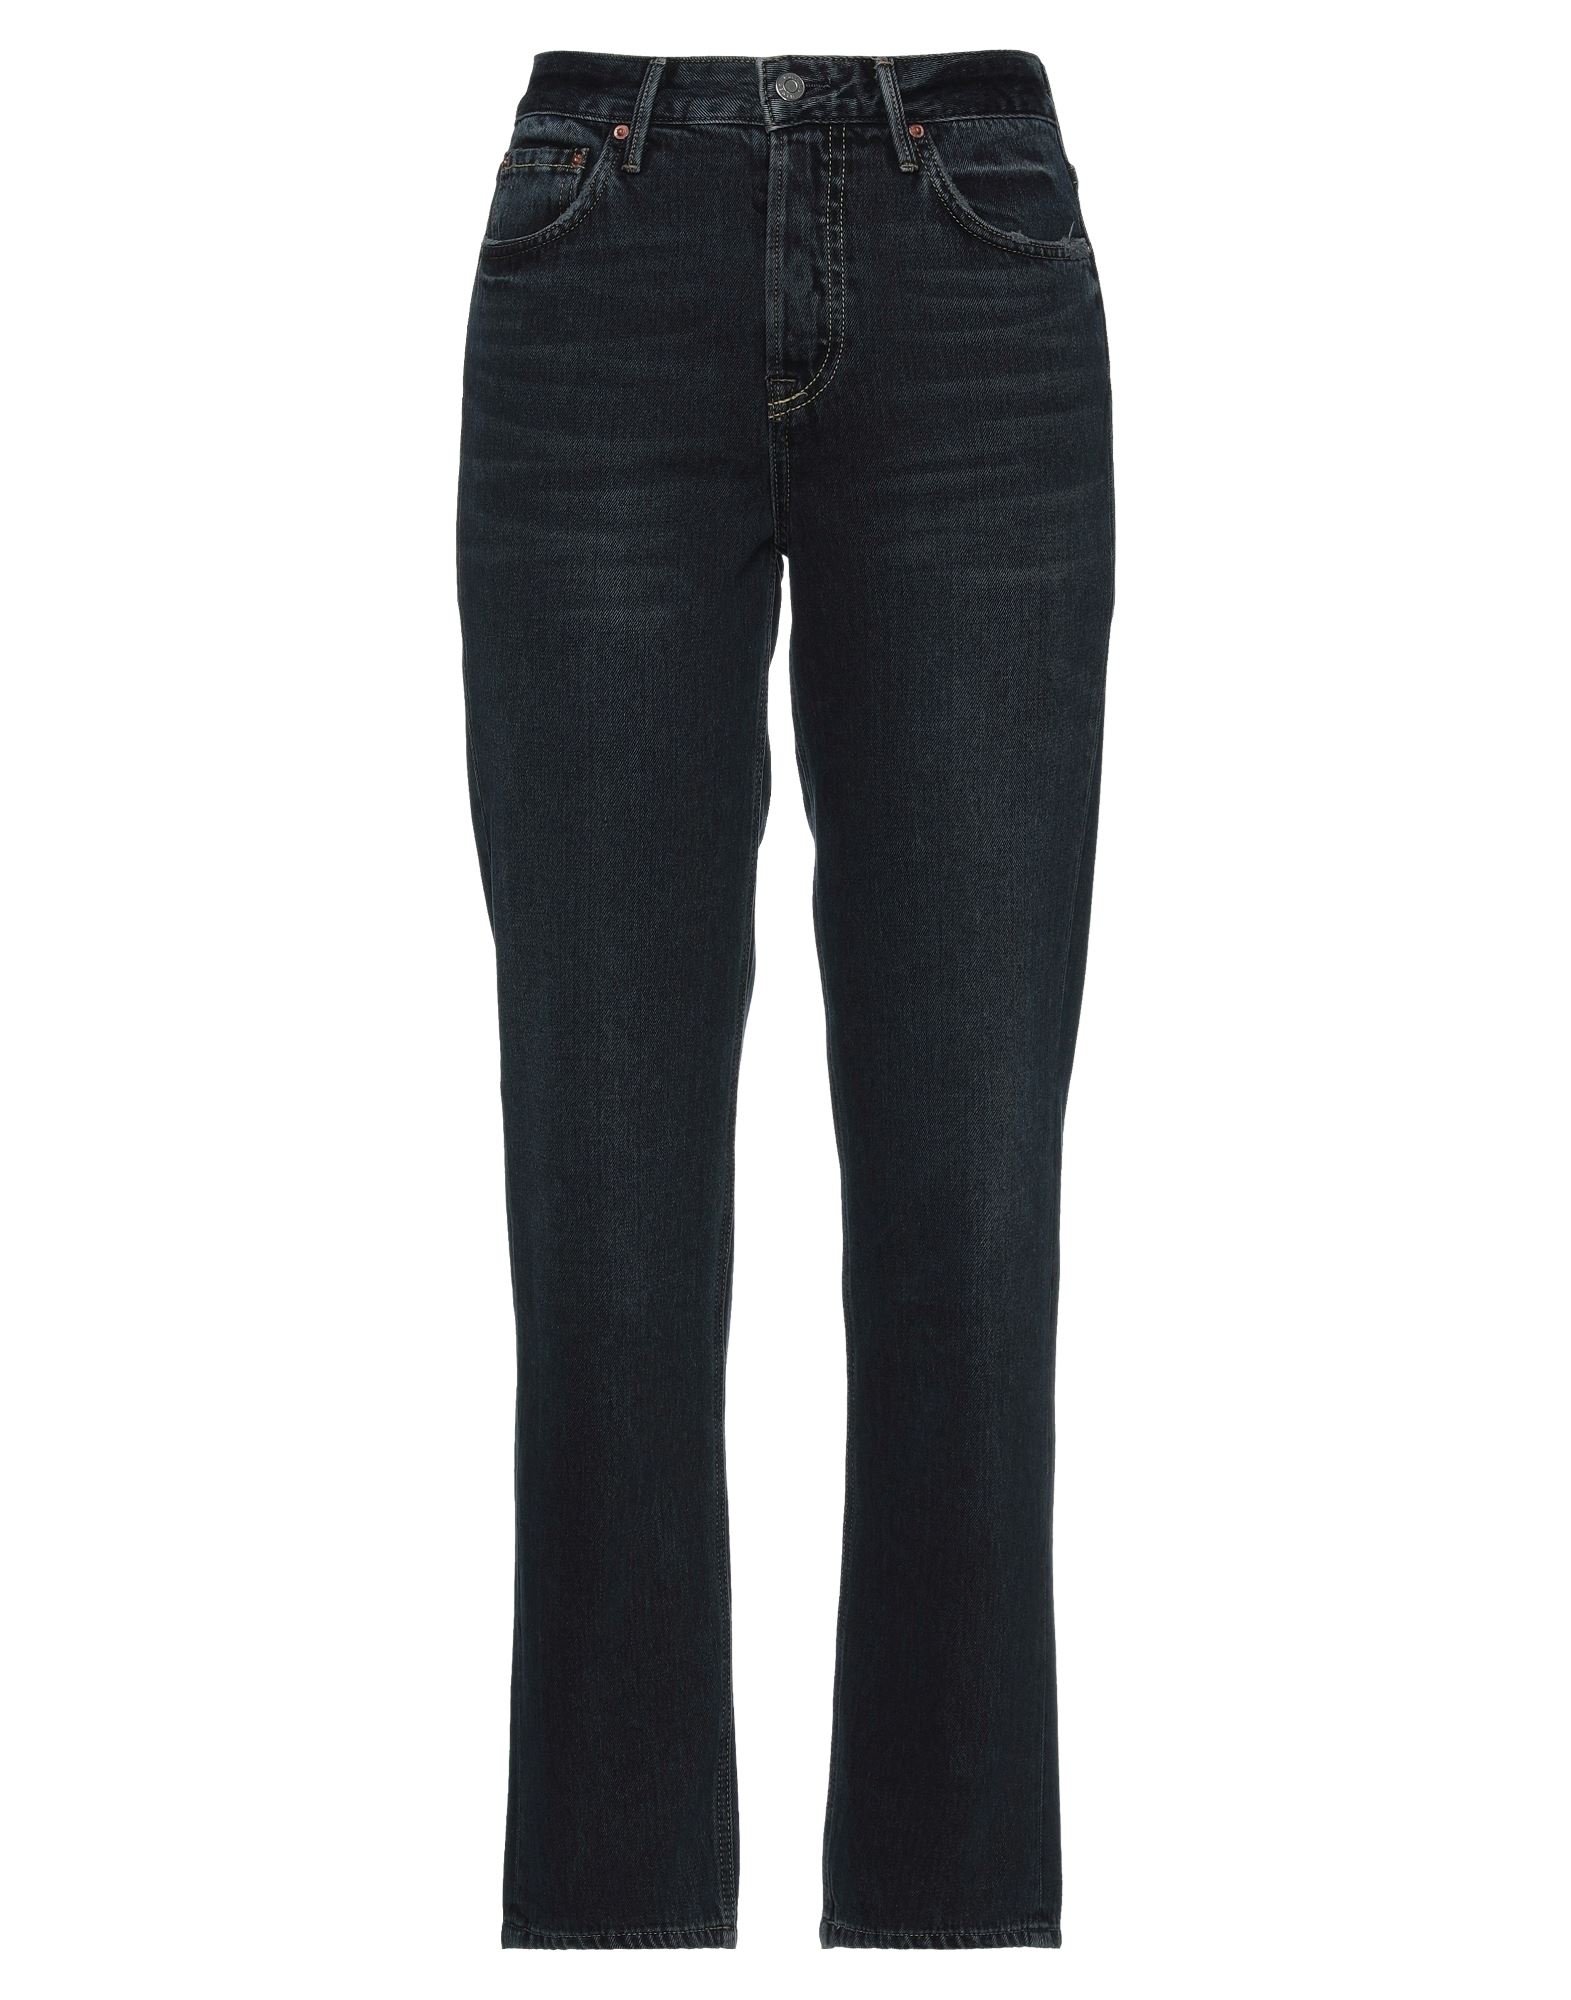 GRLFRND Jeans | Smart Closet